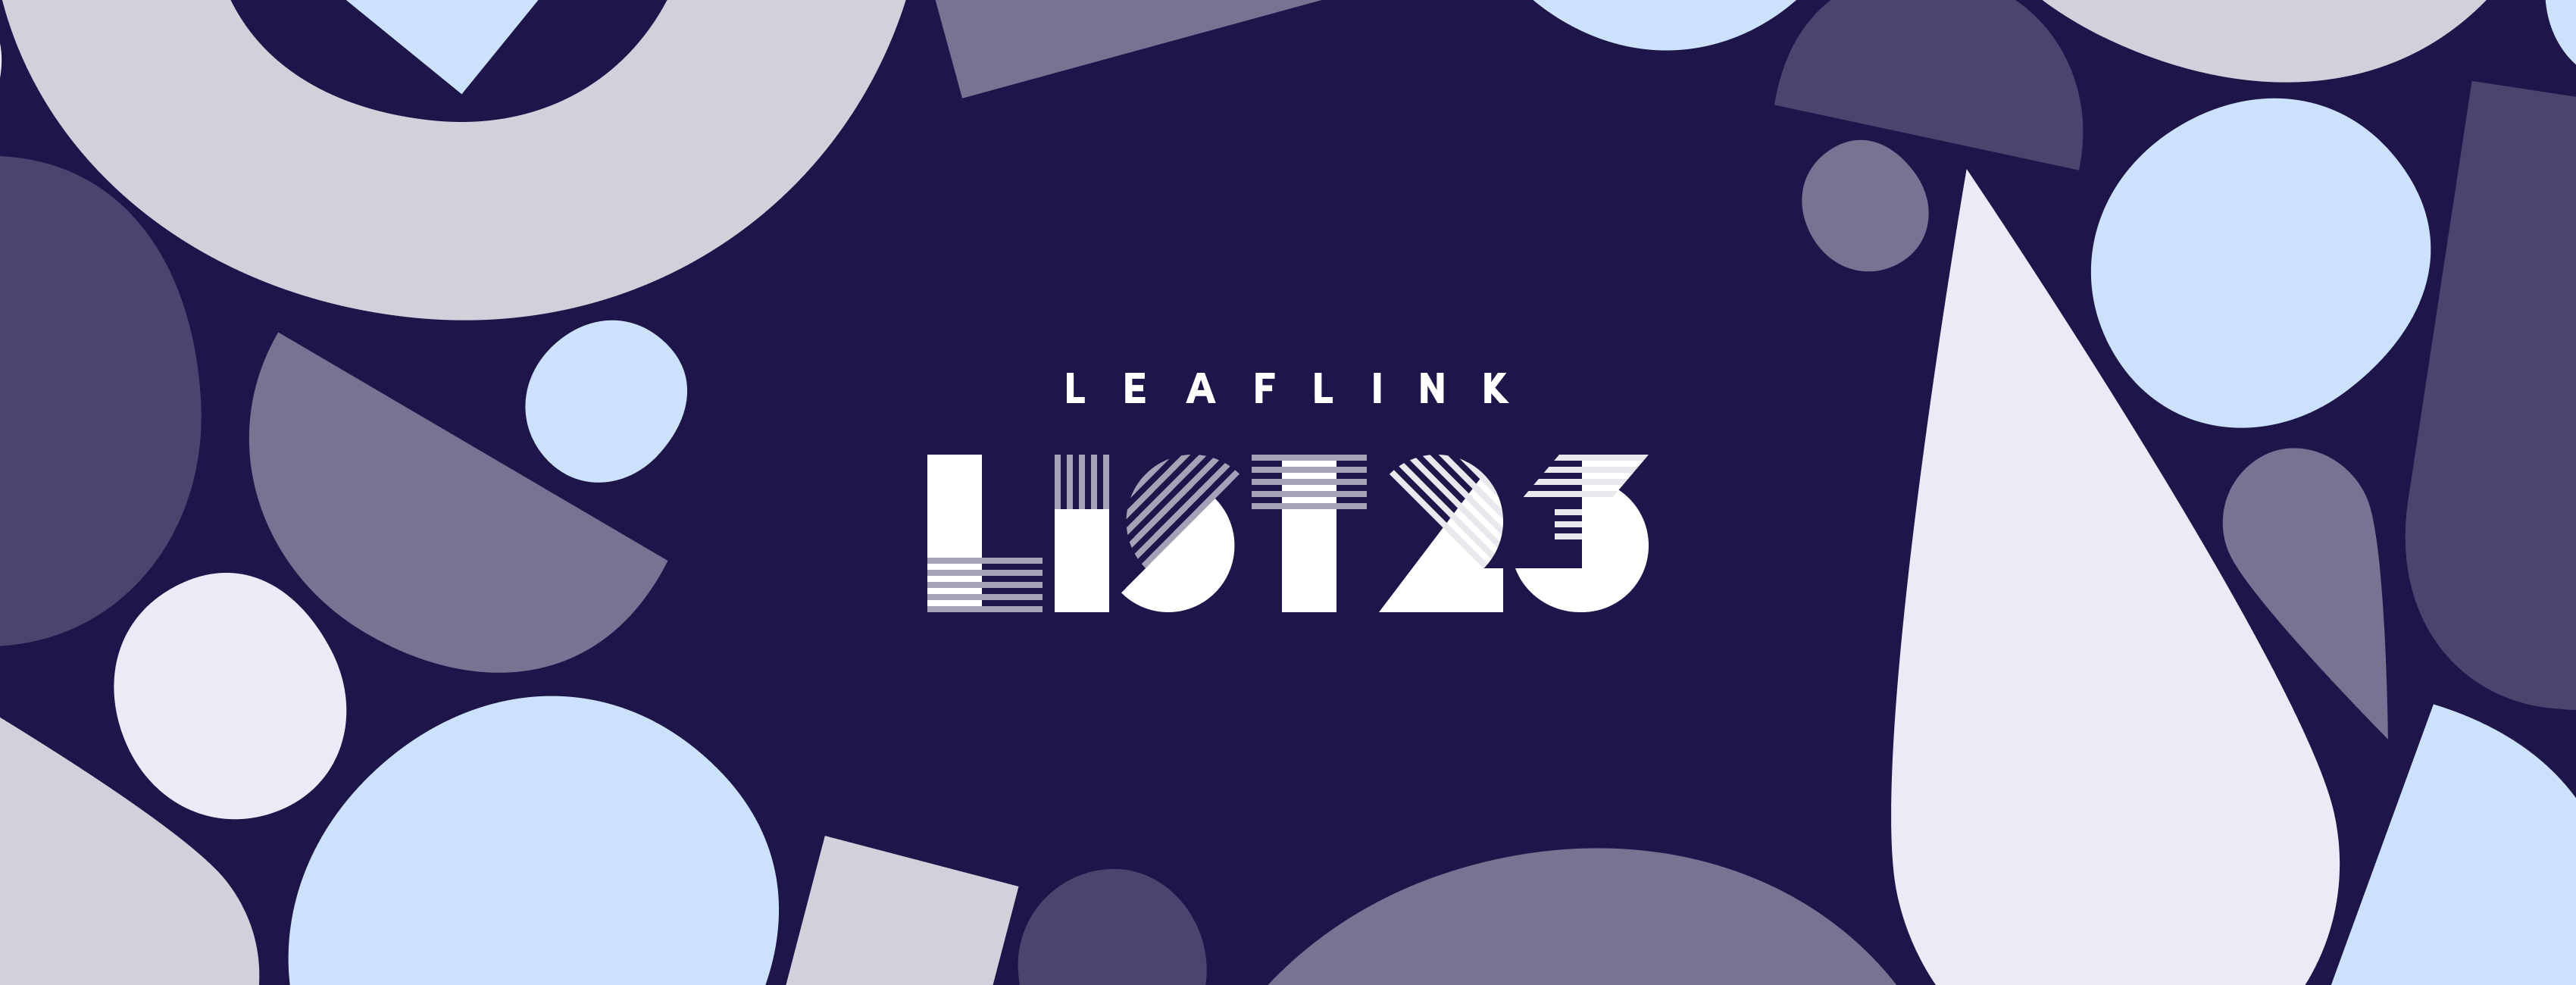 Introducing: LeafLink List 2023